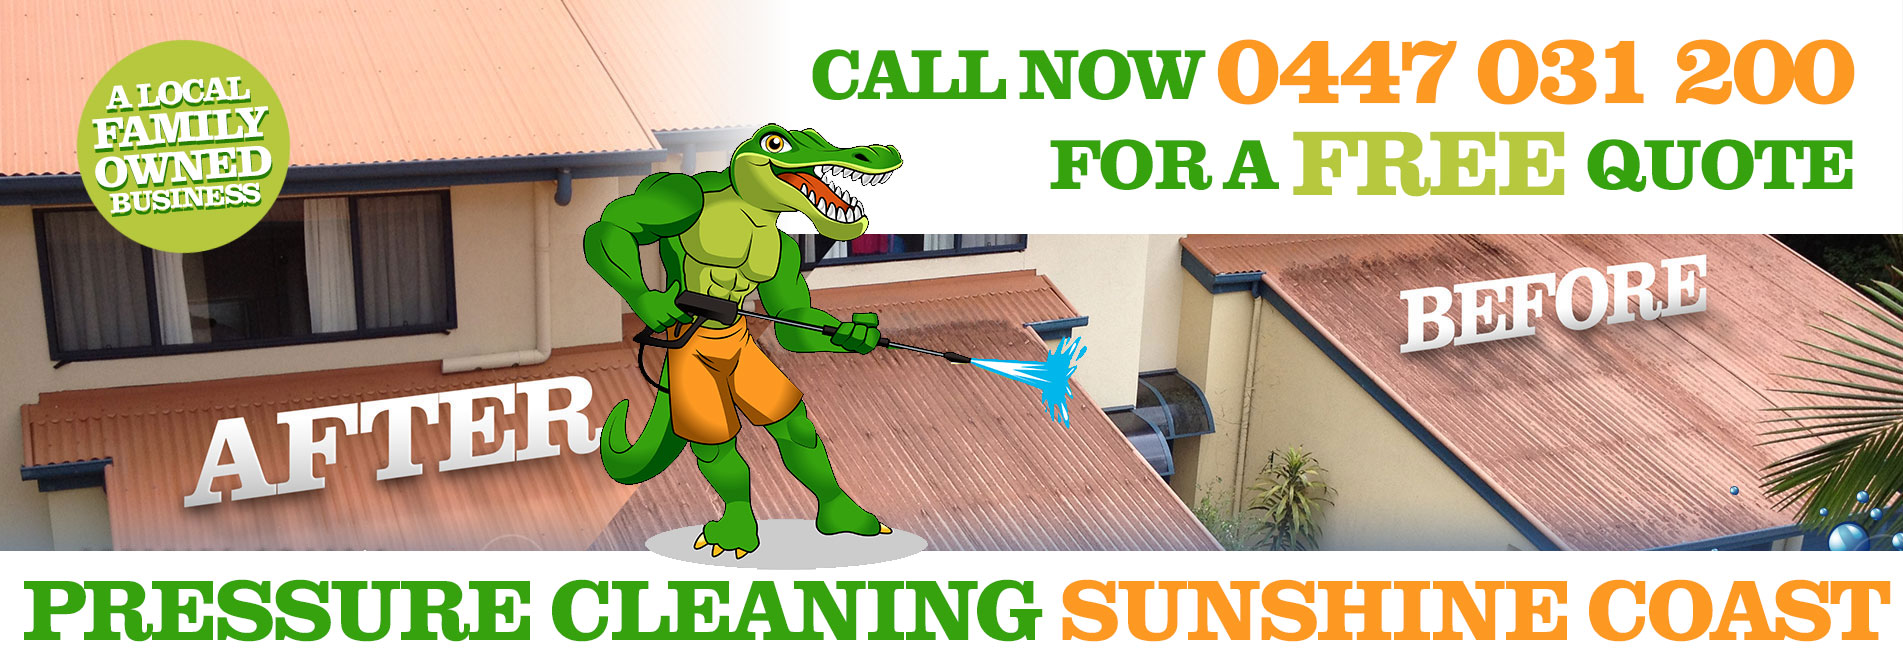 Pressure Cleaning Sunshine Coast Website Home Page Slide 03